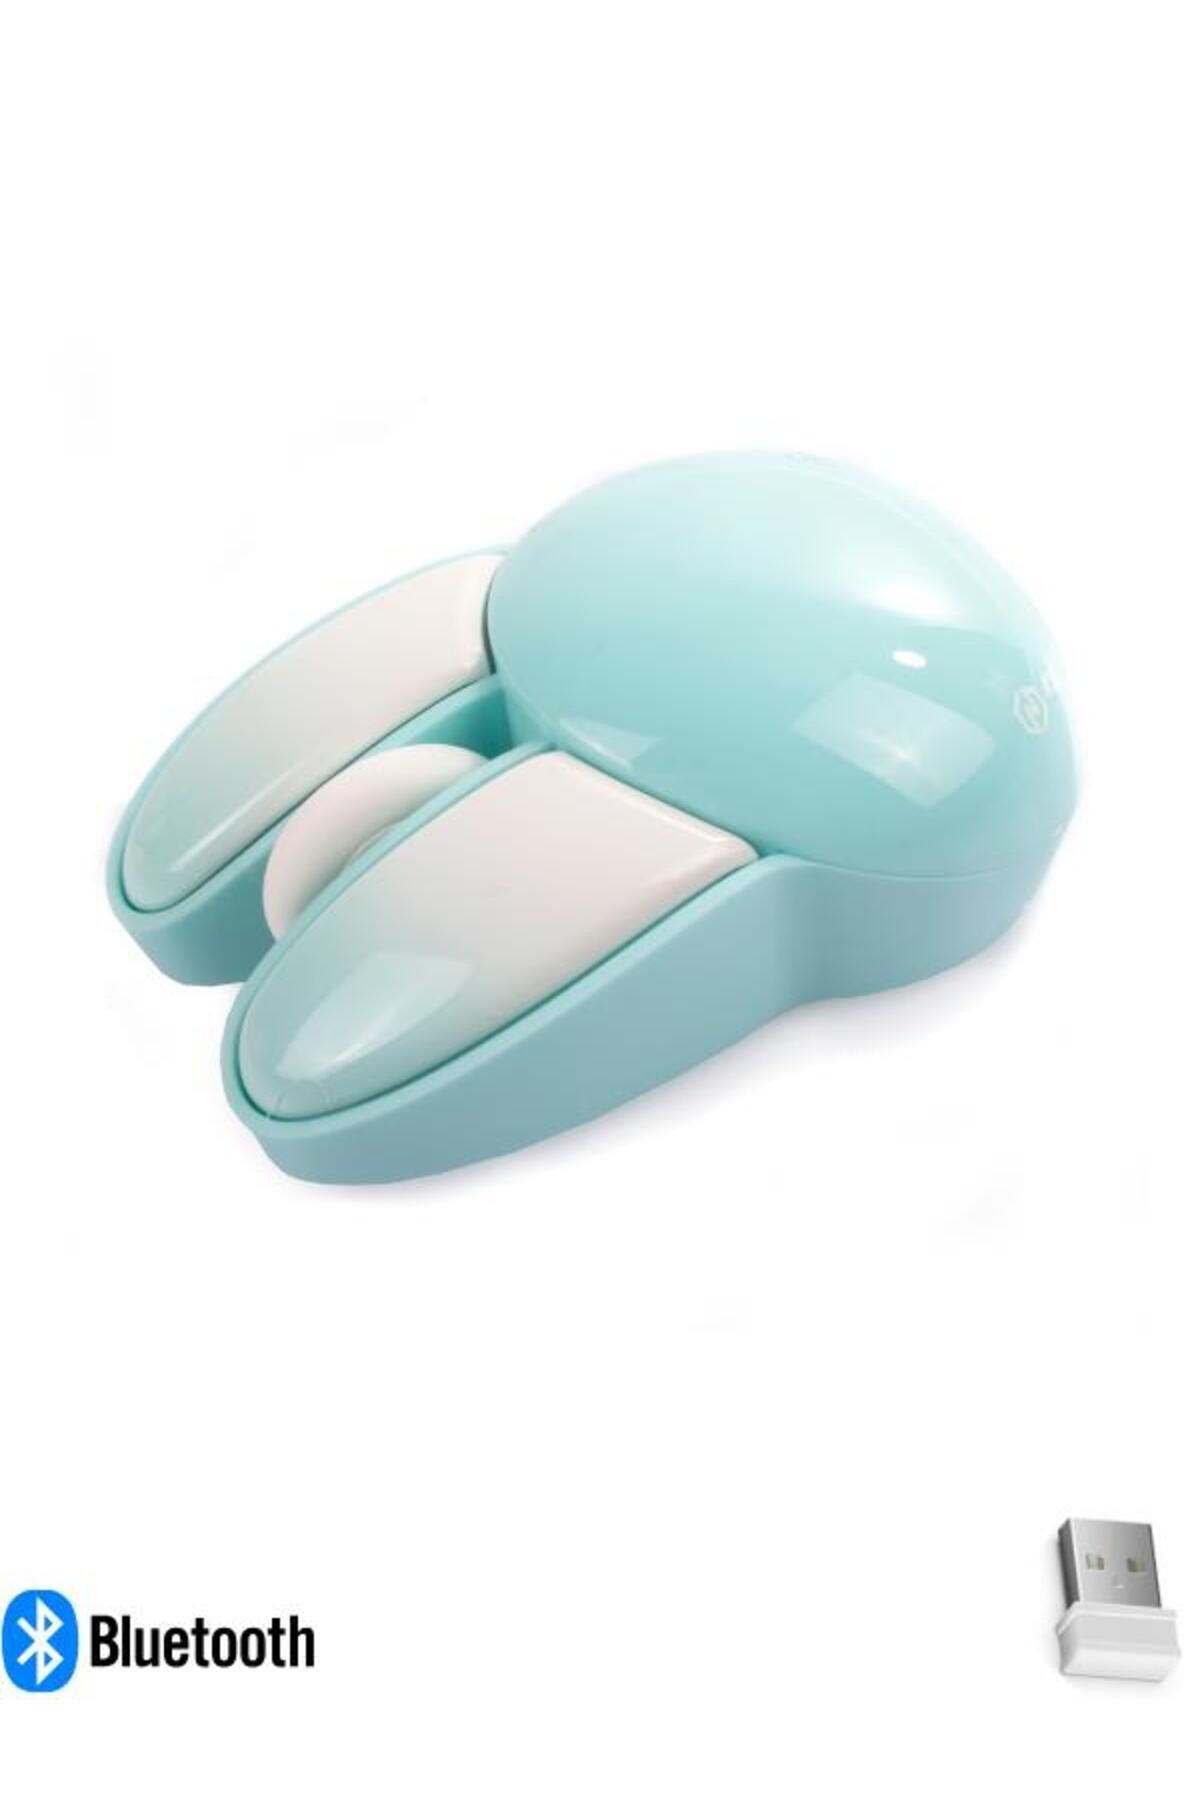 NDNeed Sevimli Tavşan 3D Mavi Mouse Bluetooth + 2.4G Dual Mode